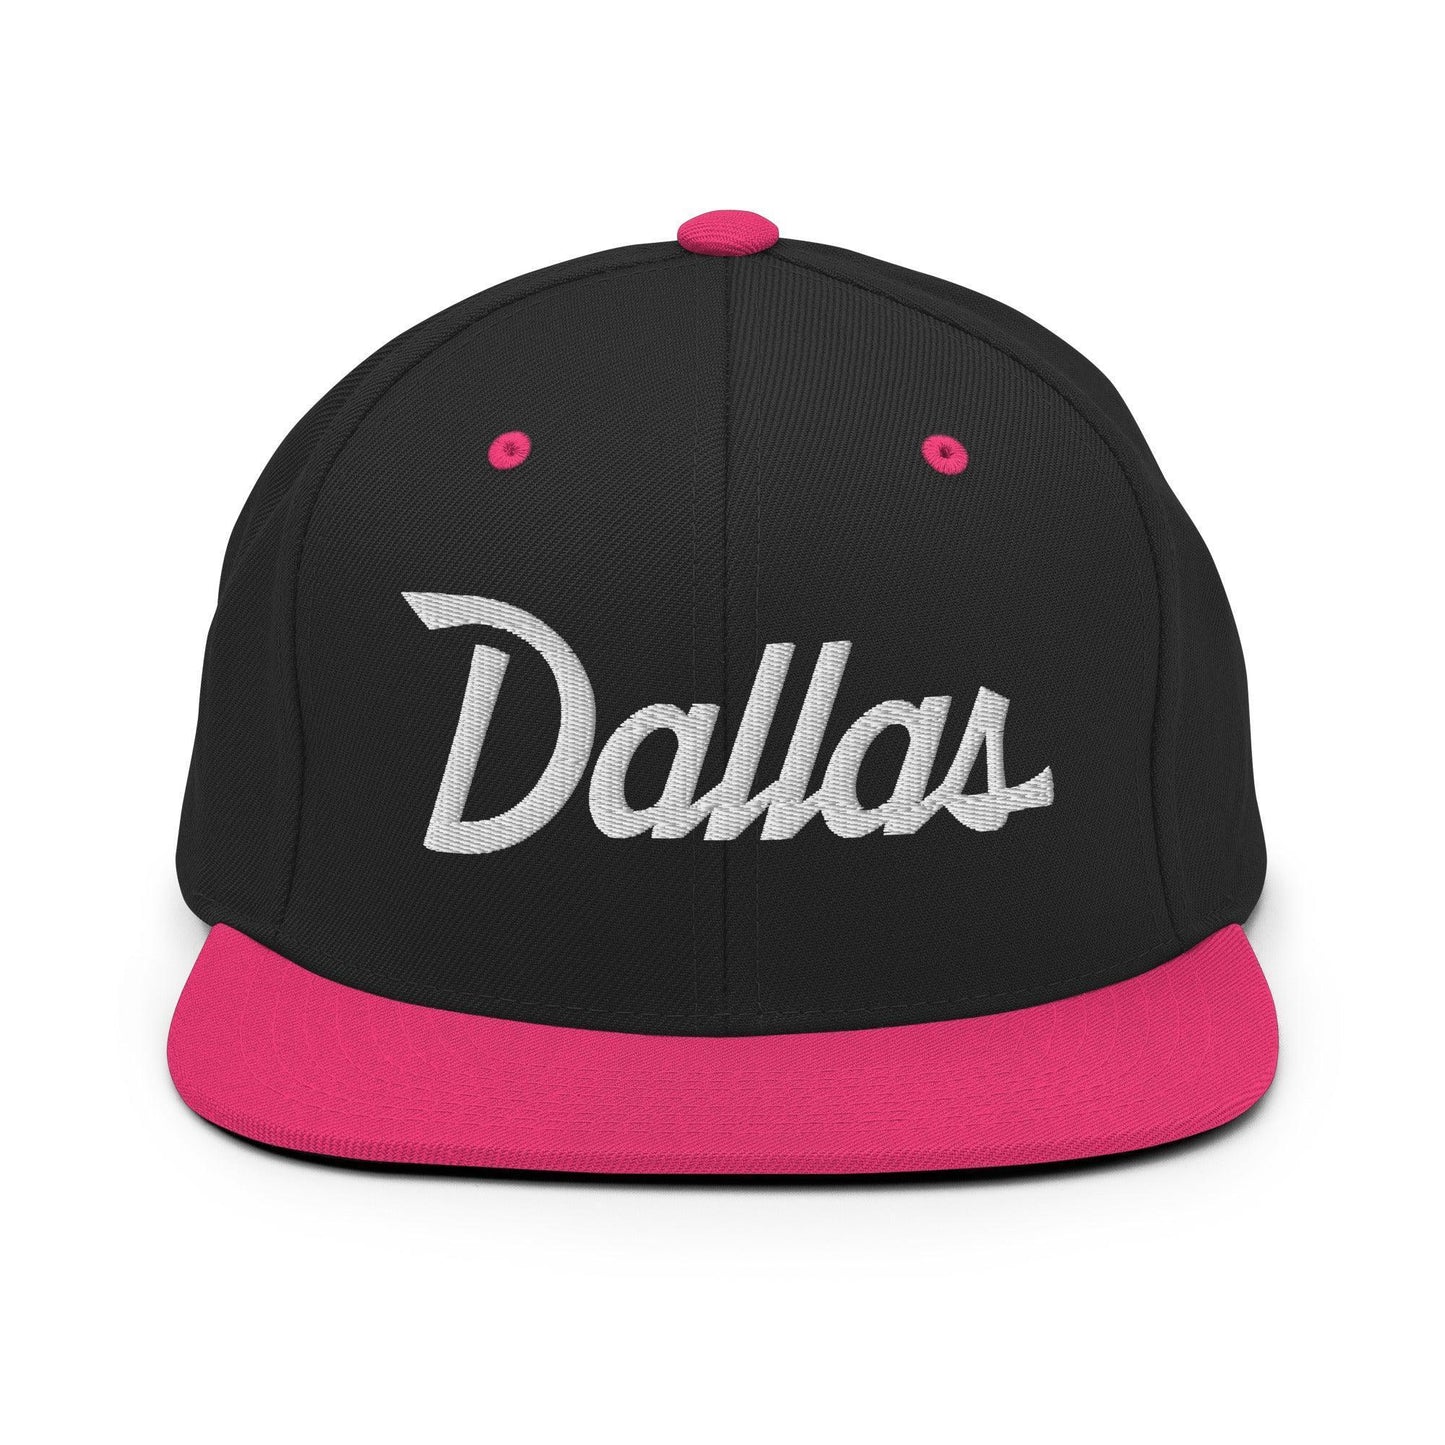 Dallas Script Snapback Hat Black Neon Pink